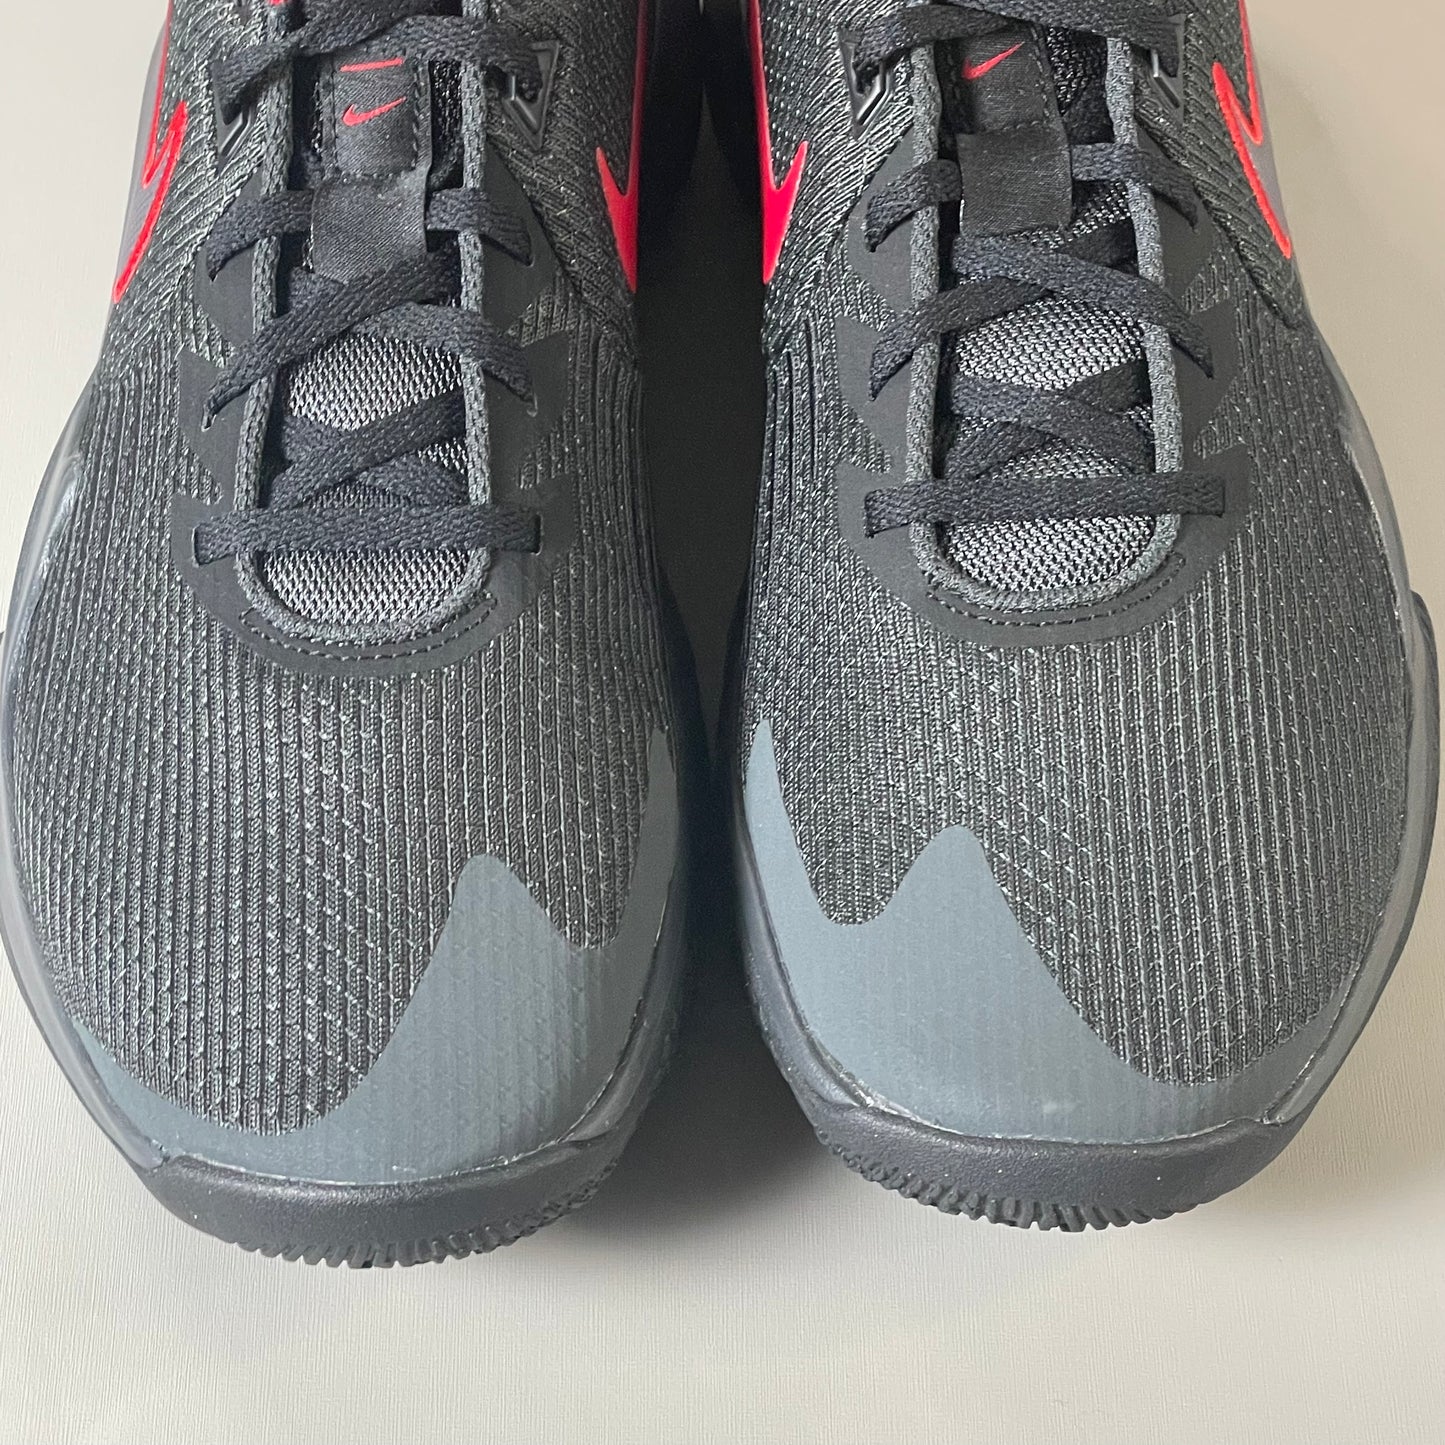 NIKE Precision 5 Basketball Shoes Men's Sz 11.5 Anthracite/Grey CW3403 007 (New)